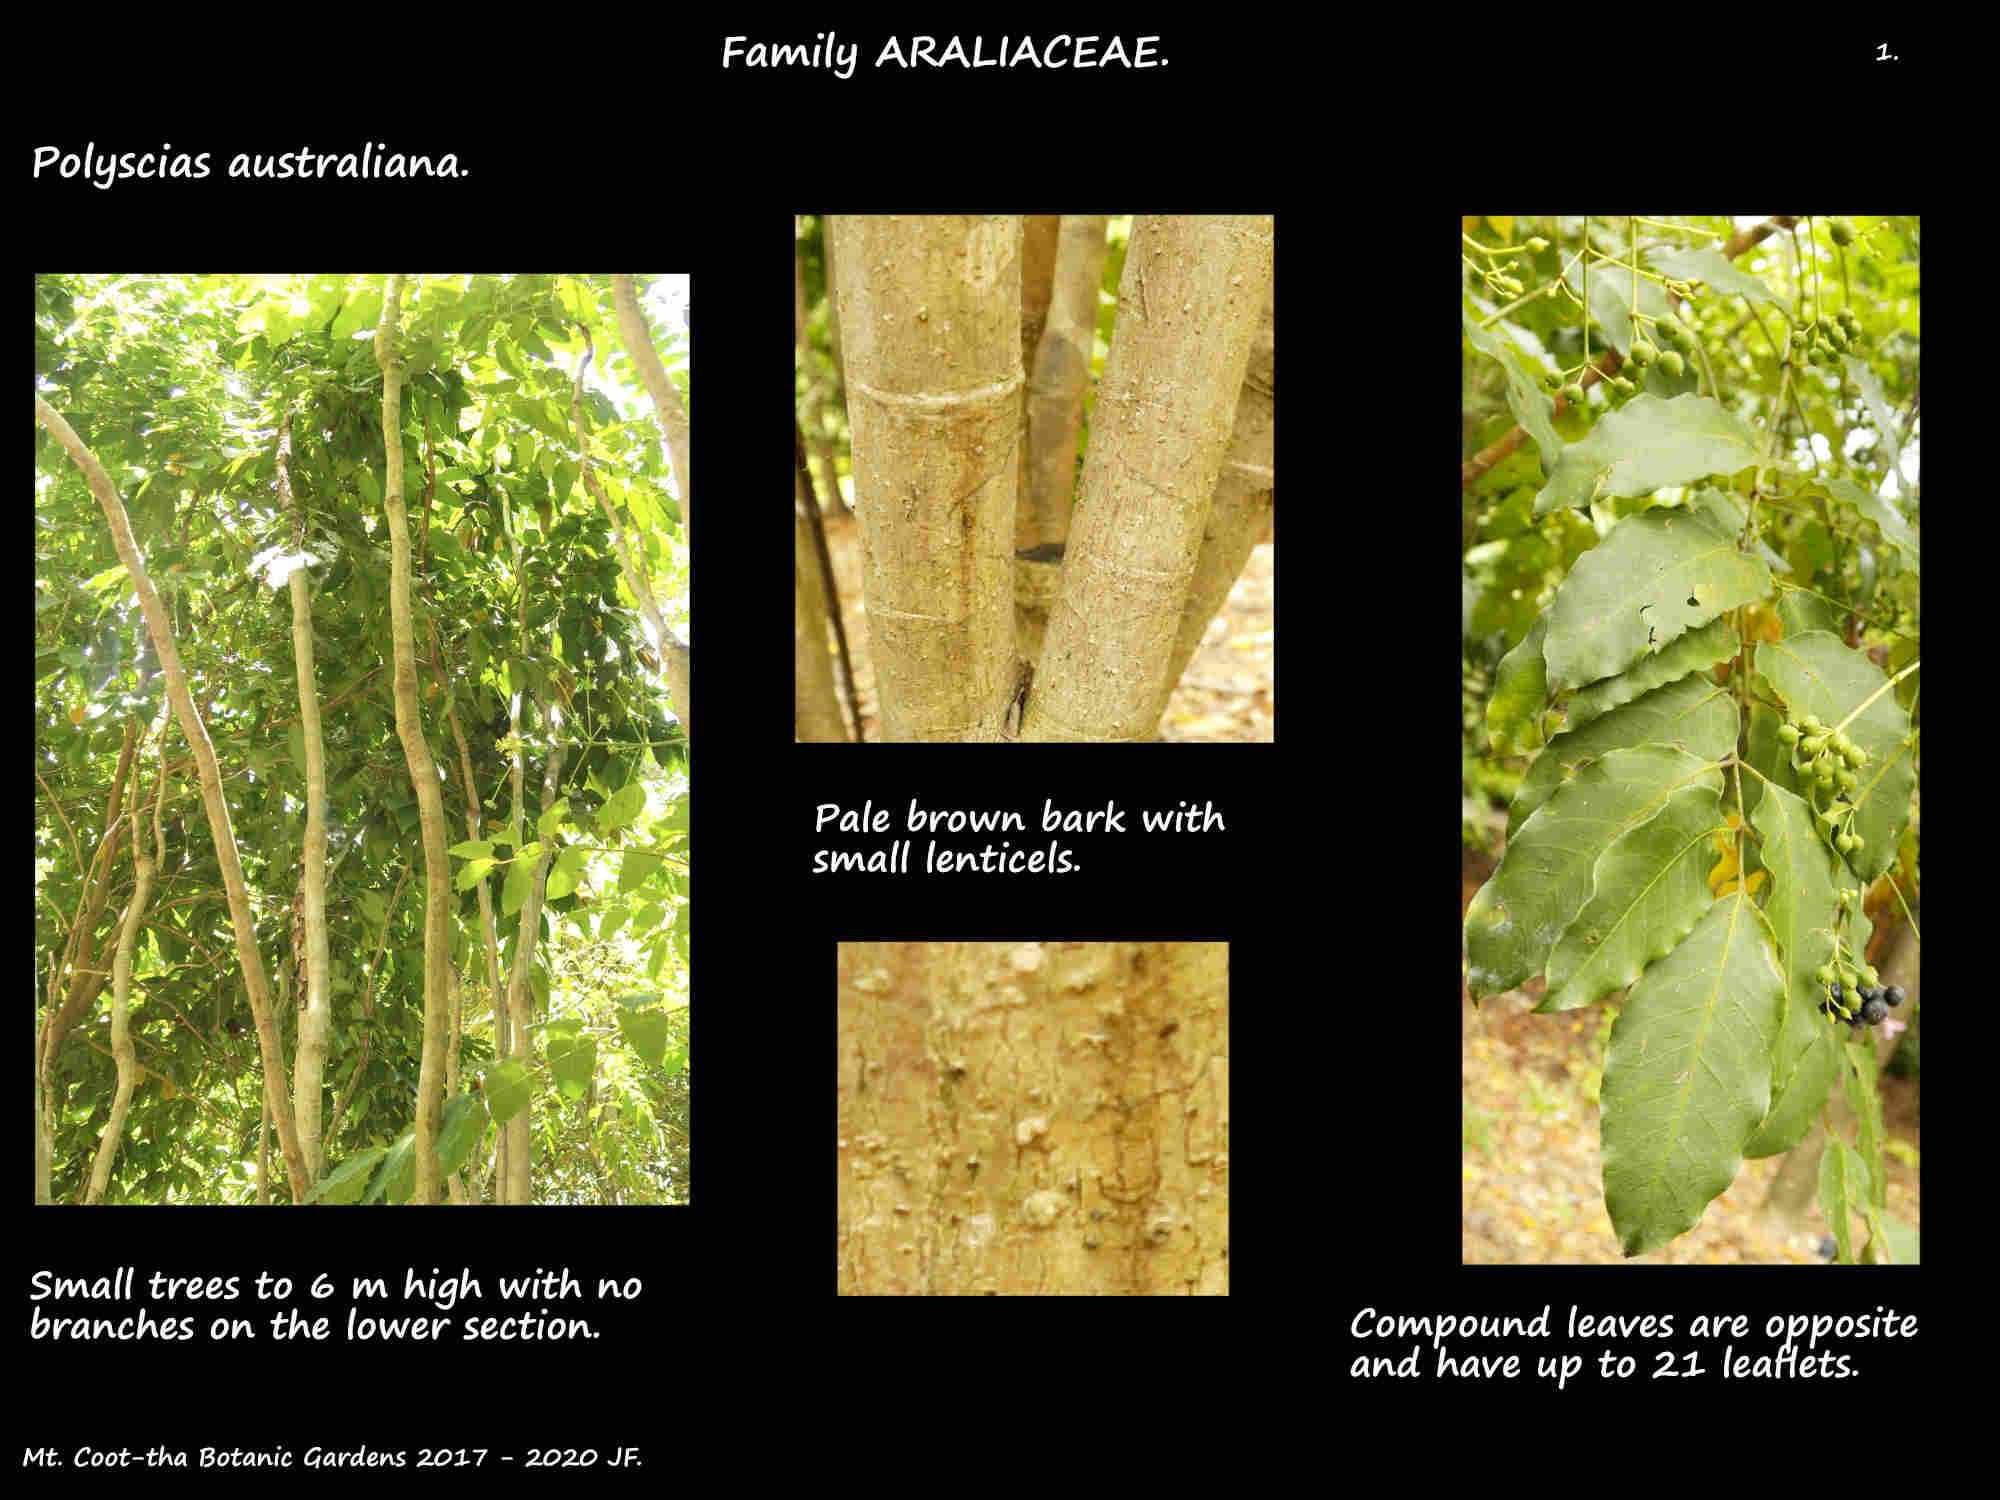 1 Polyscias australiana trees, bark & a compound leaf